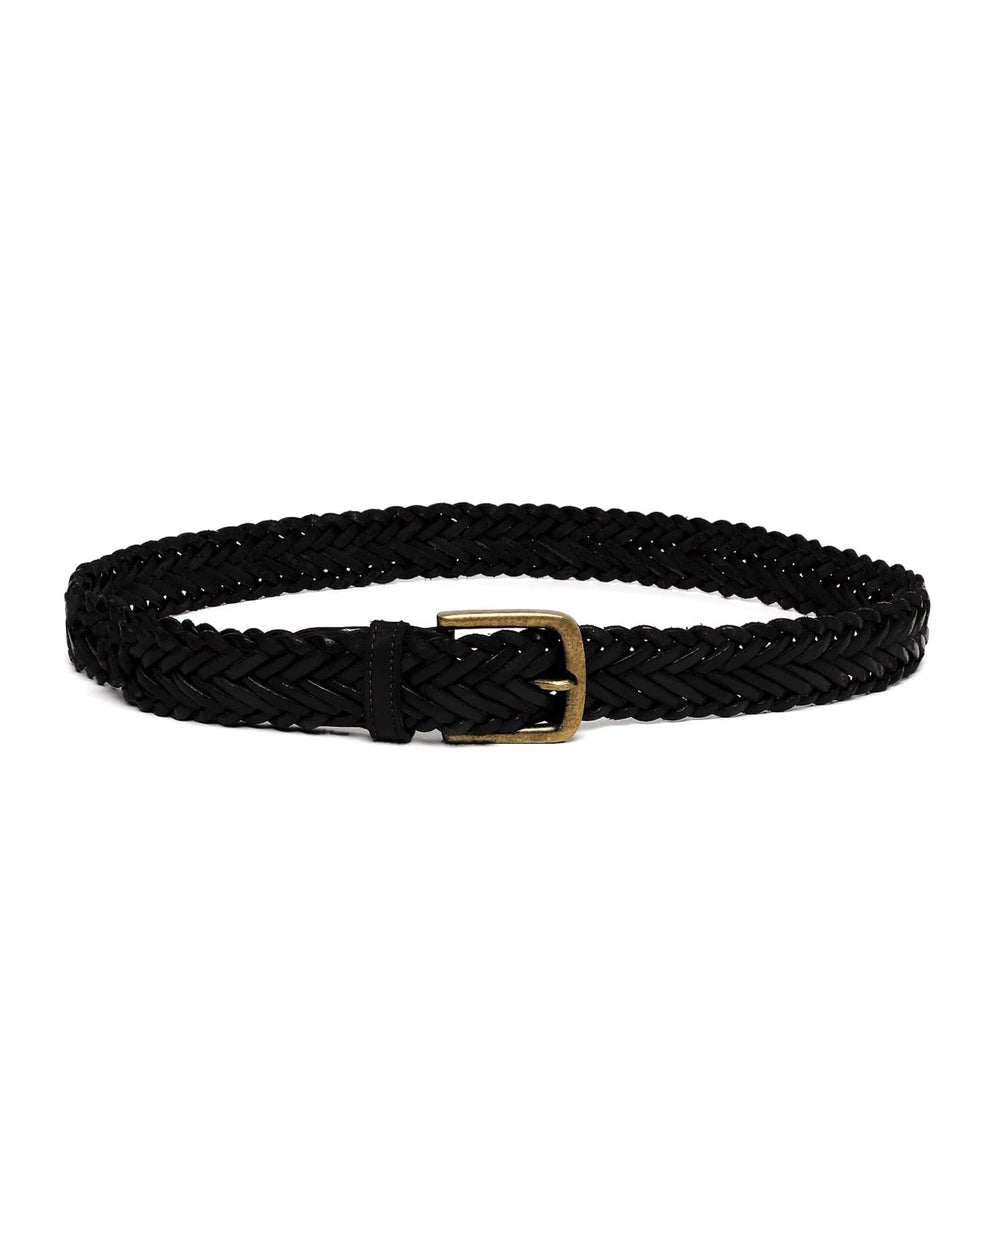 Black Braided Belt Black Leather Braided Belt Gold Buckle Black